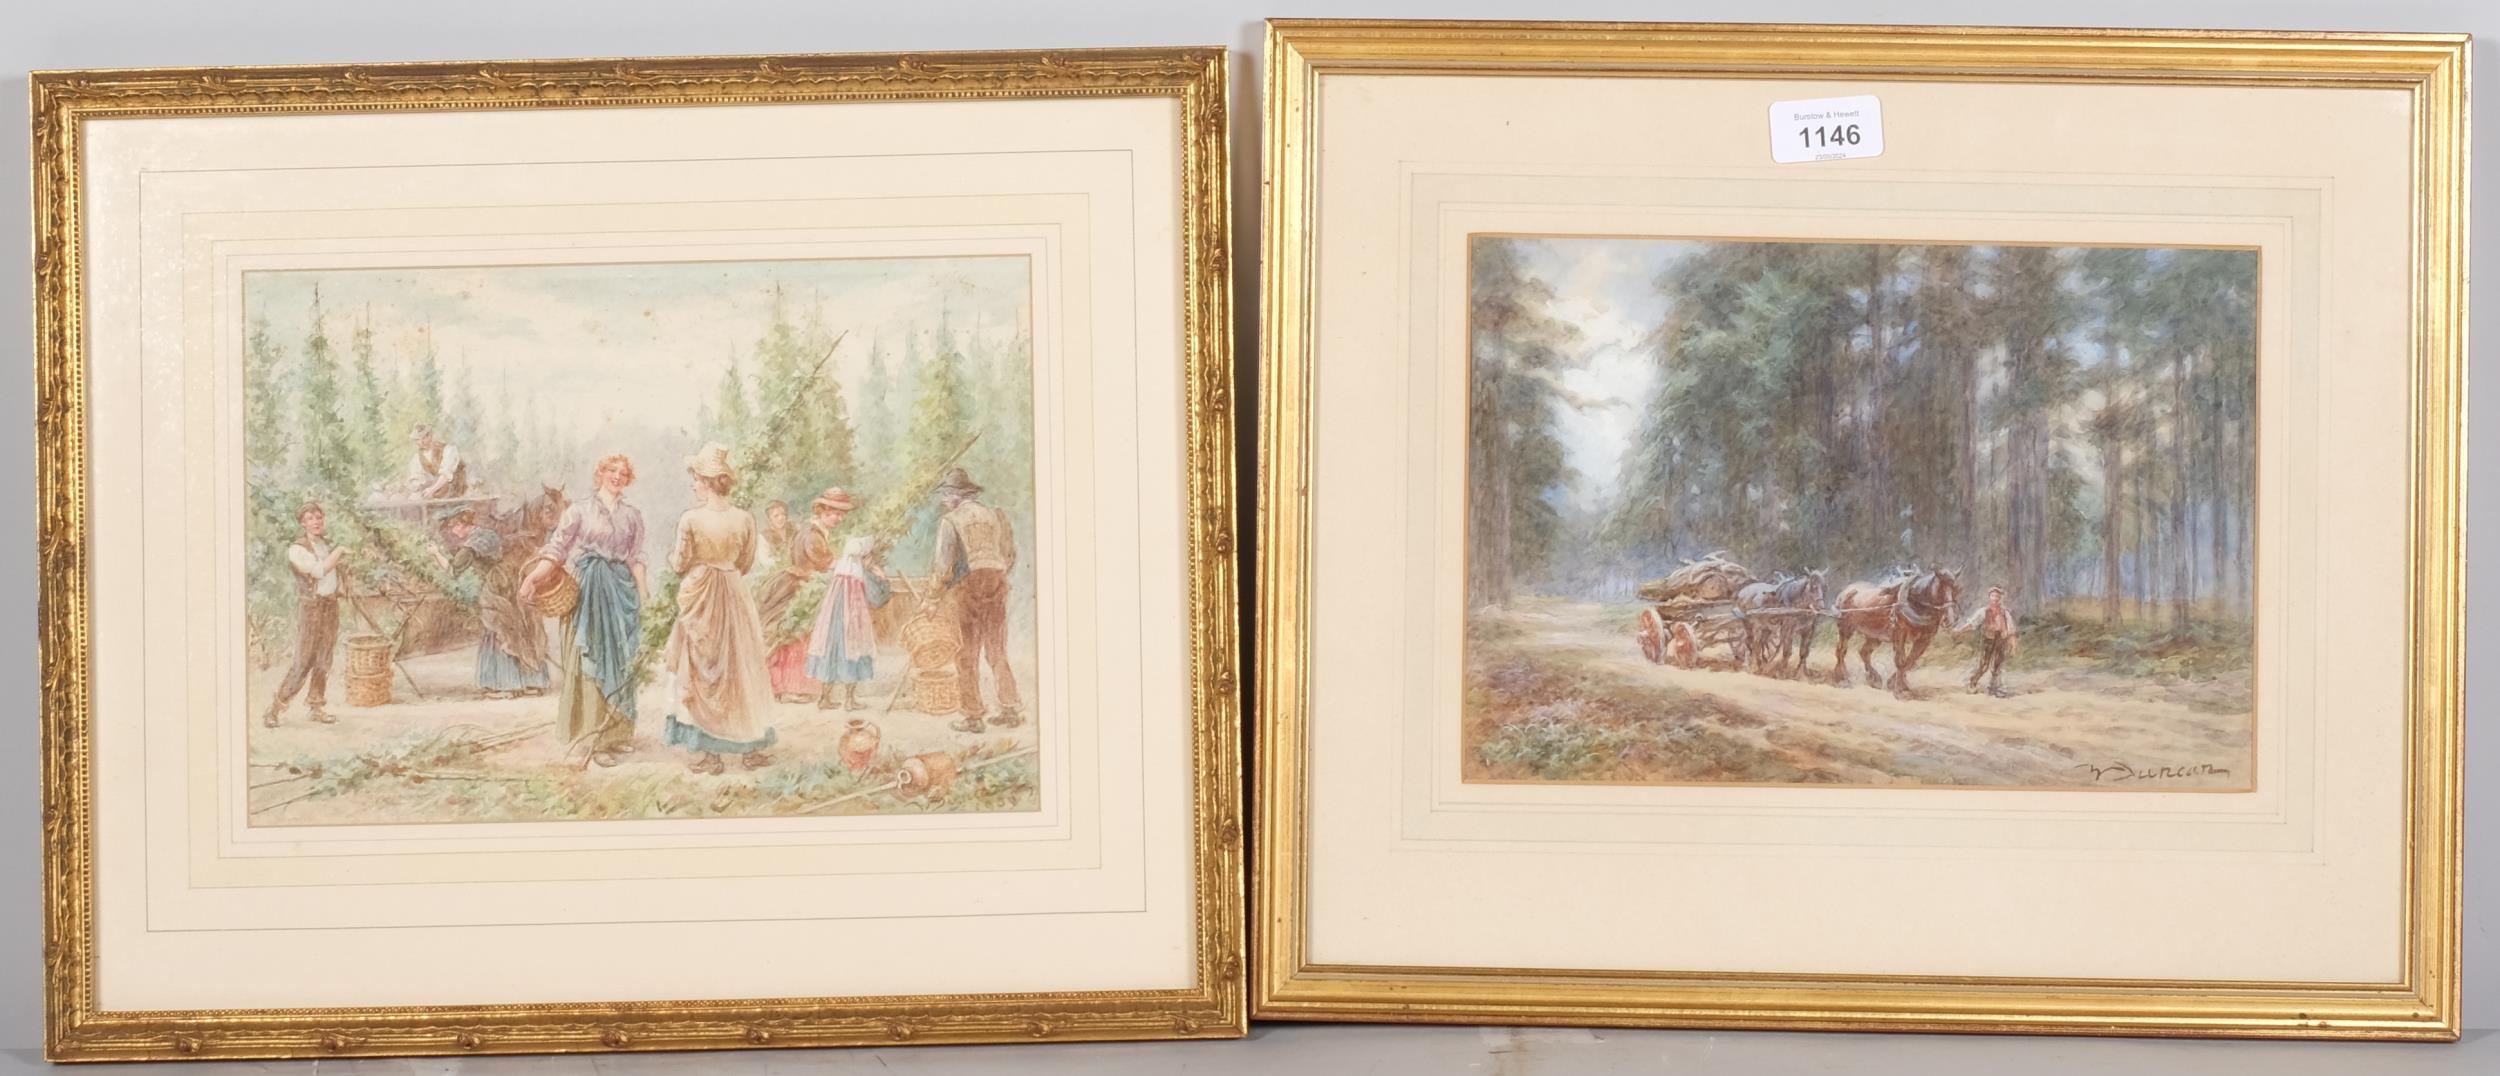 Walter Duncan, 3 rural scenes, watercolours, all signed, 18cm x 27cm, framed (3)